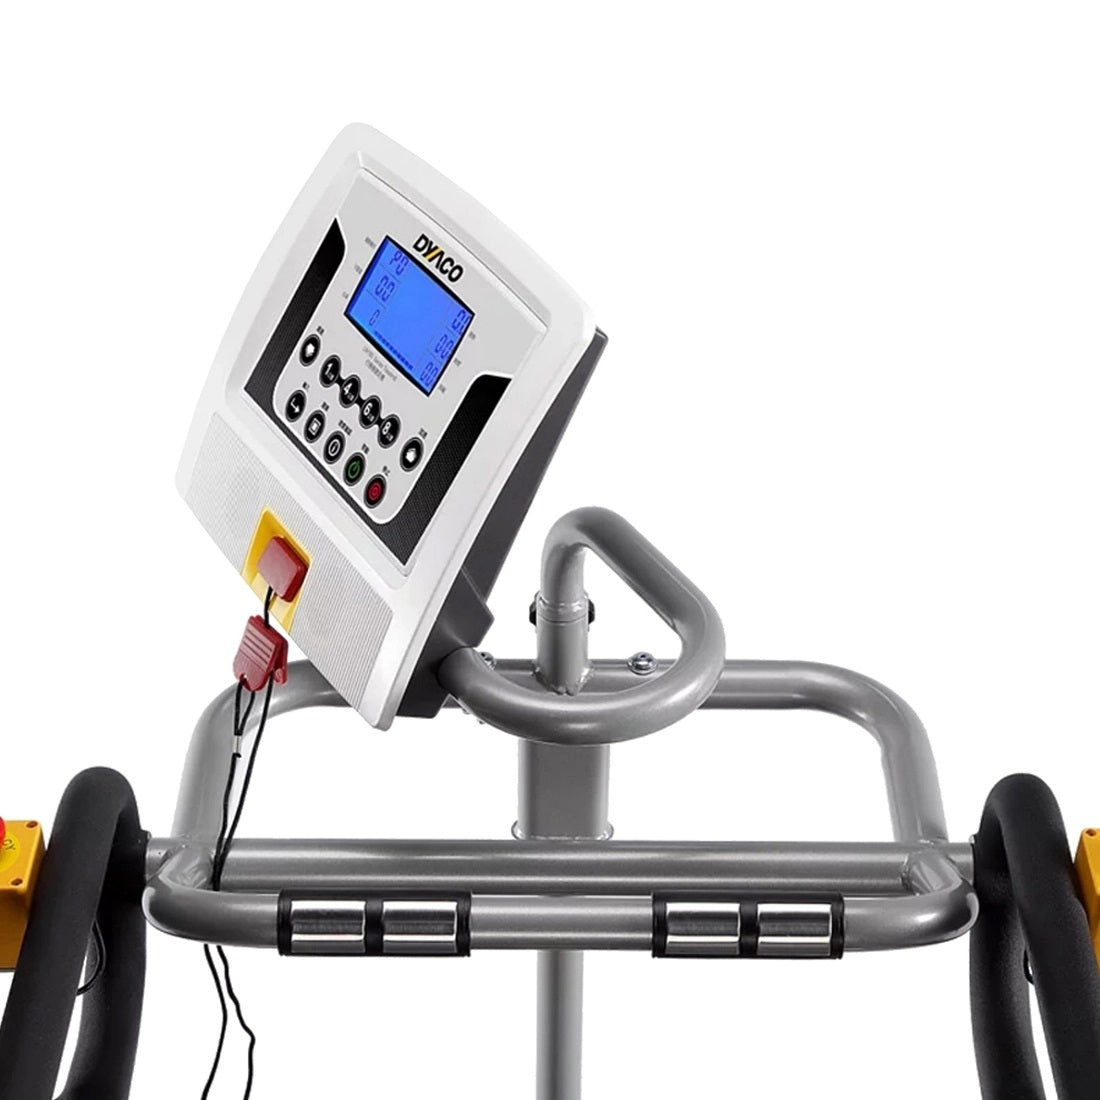 lw450 elders treadmill rotatable display